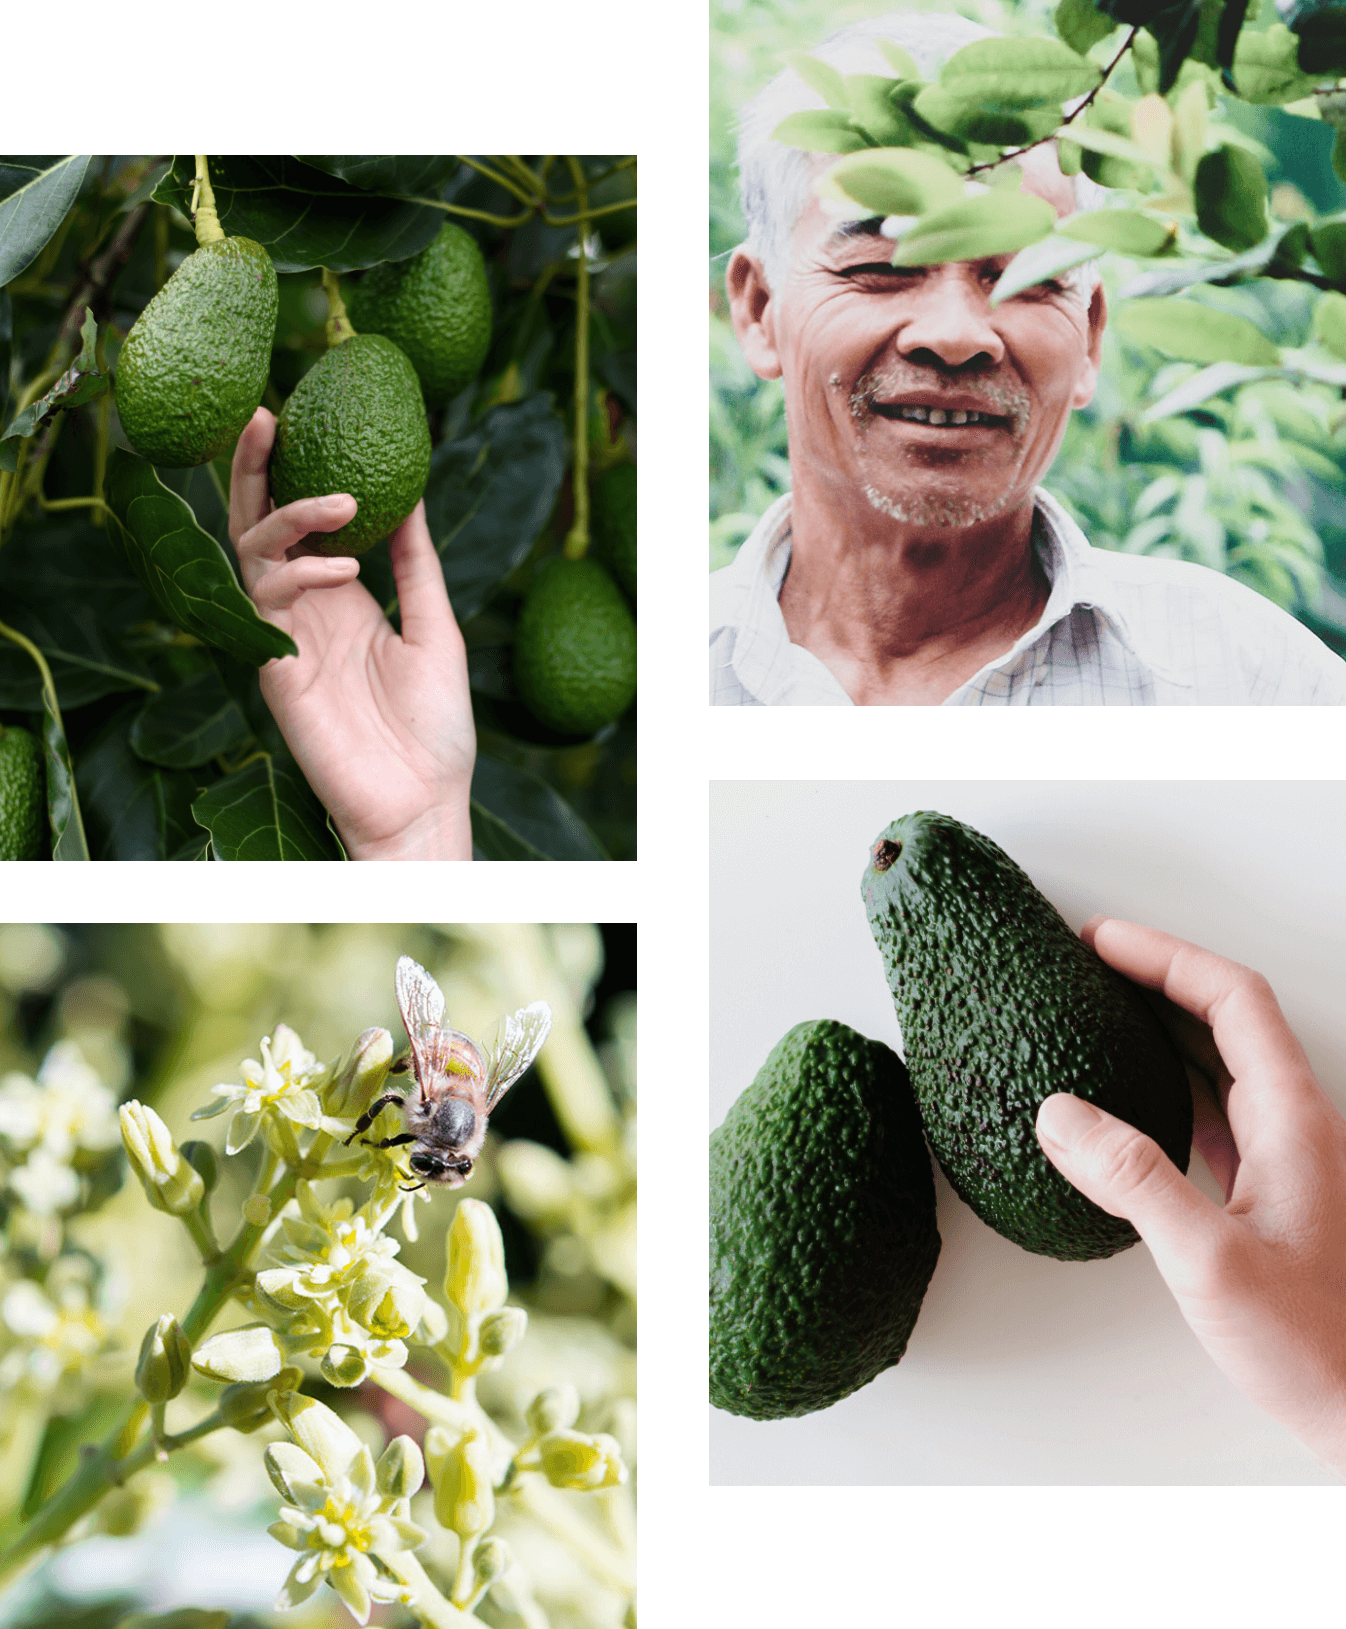 avocado collage